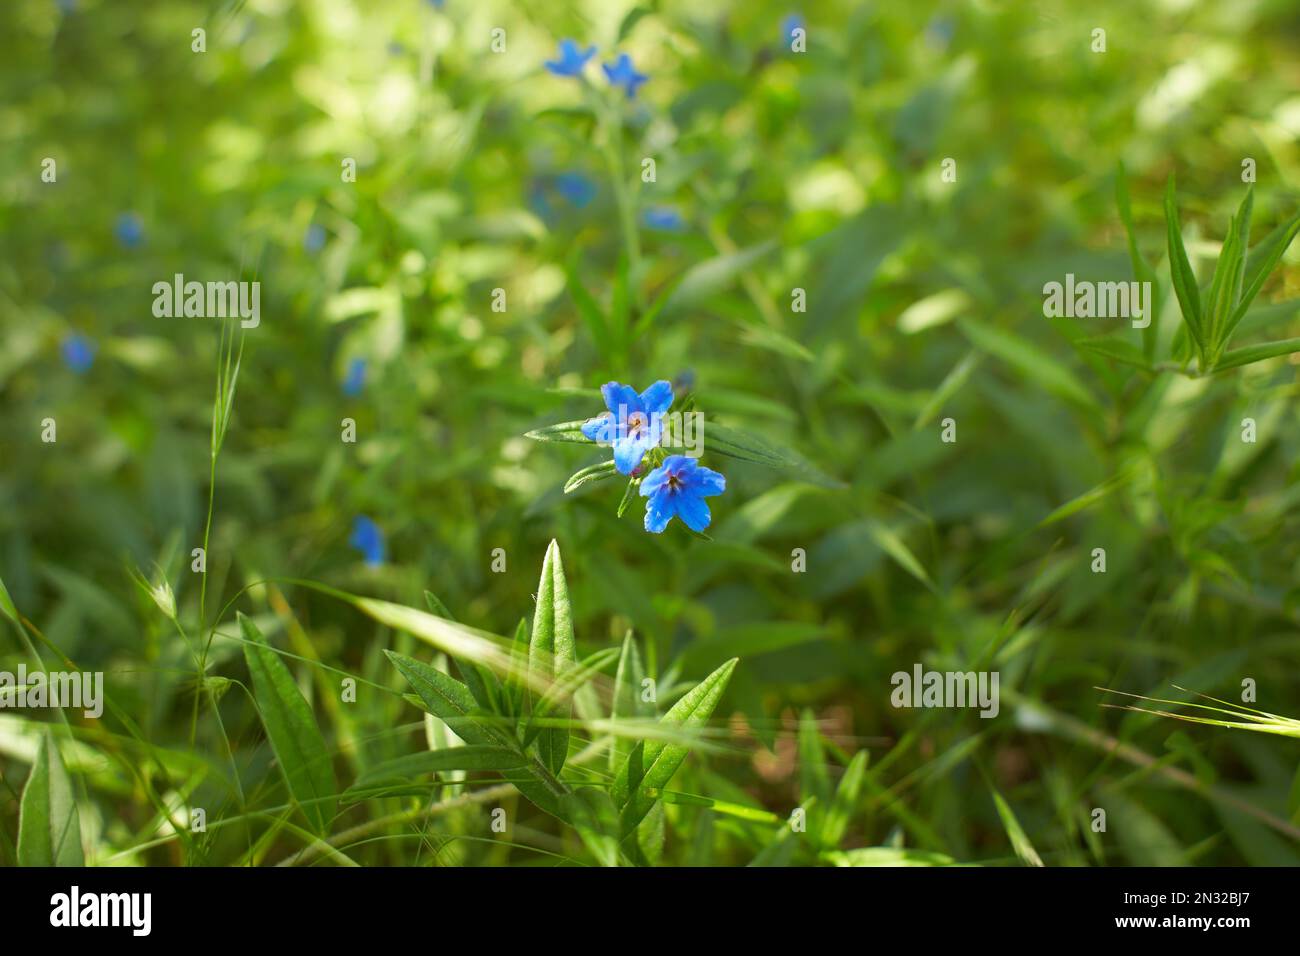 Blue flower of Lithospermum purpurocaeruleum in the garden. Summer and spring time. Stock Photo